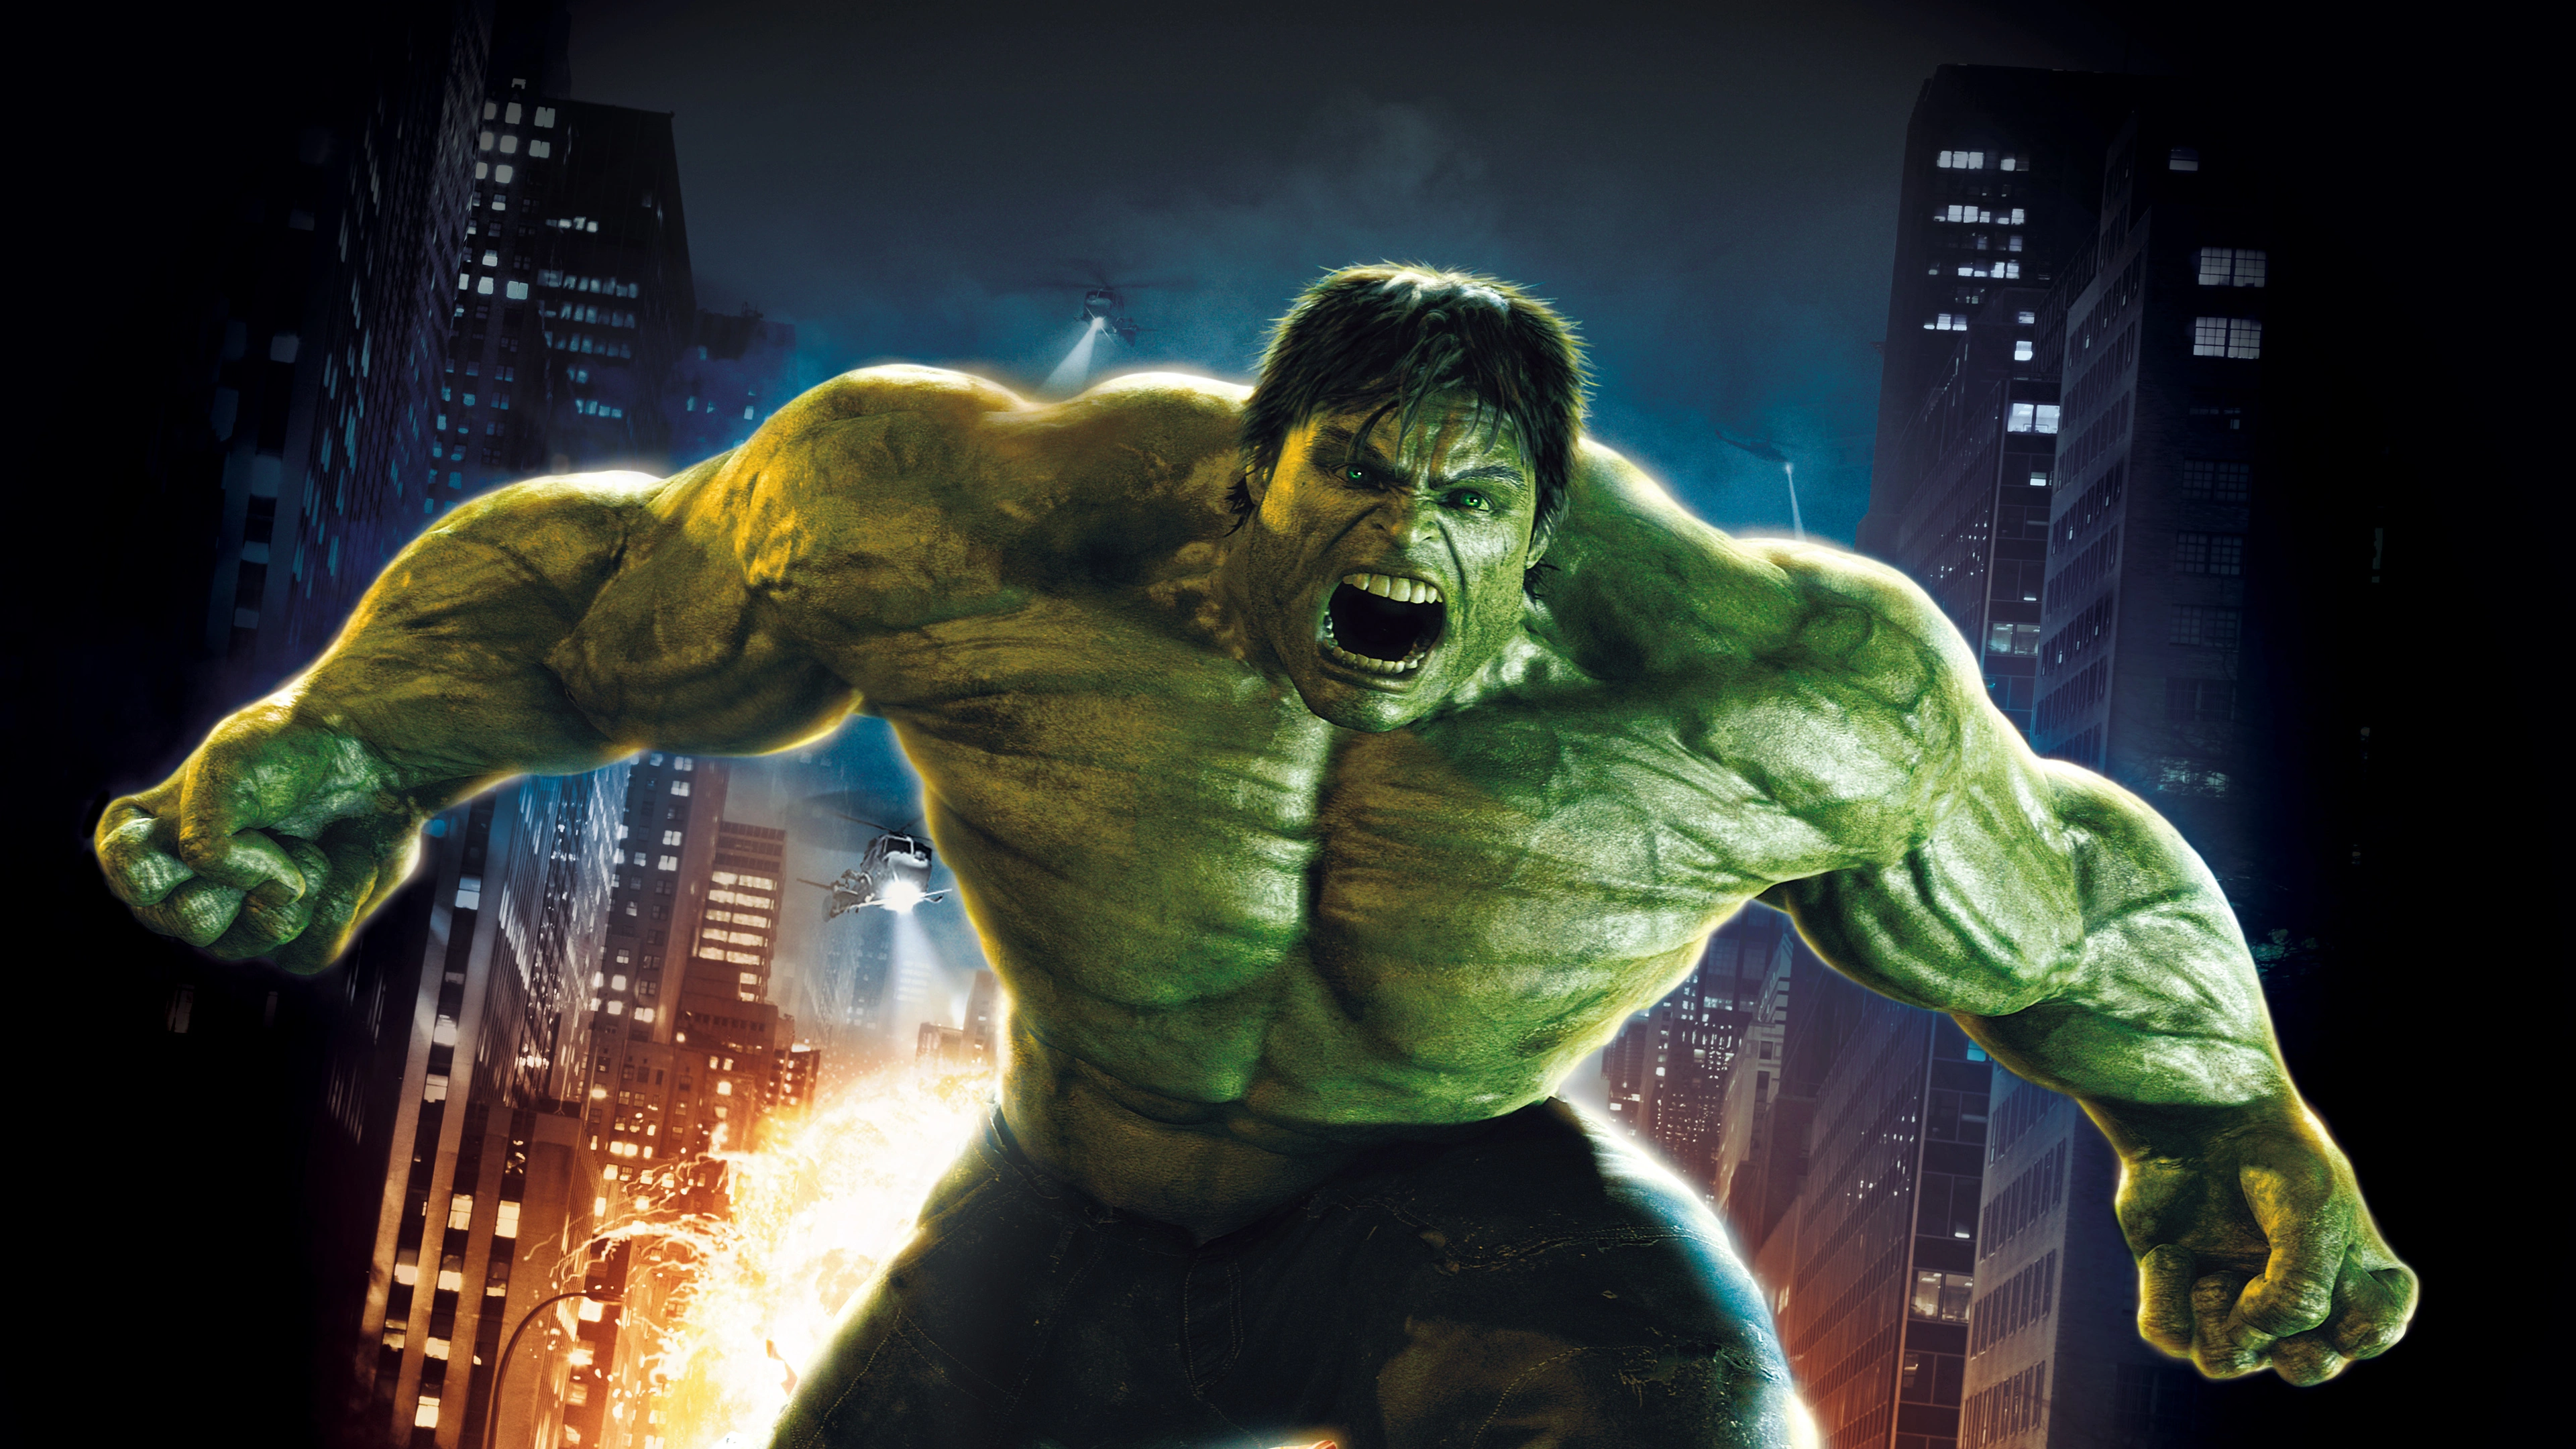 Incredible Hulk Smash Mobile Wallpaper by Laxmonaut - Mobile Abyss-thanhphatduhoc.com.vn